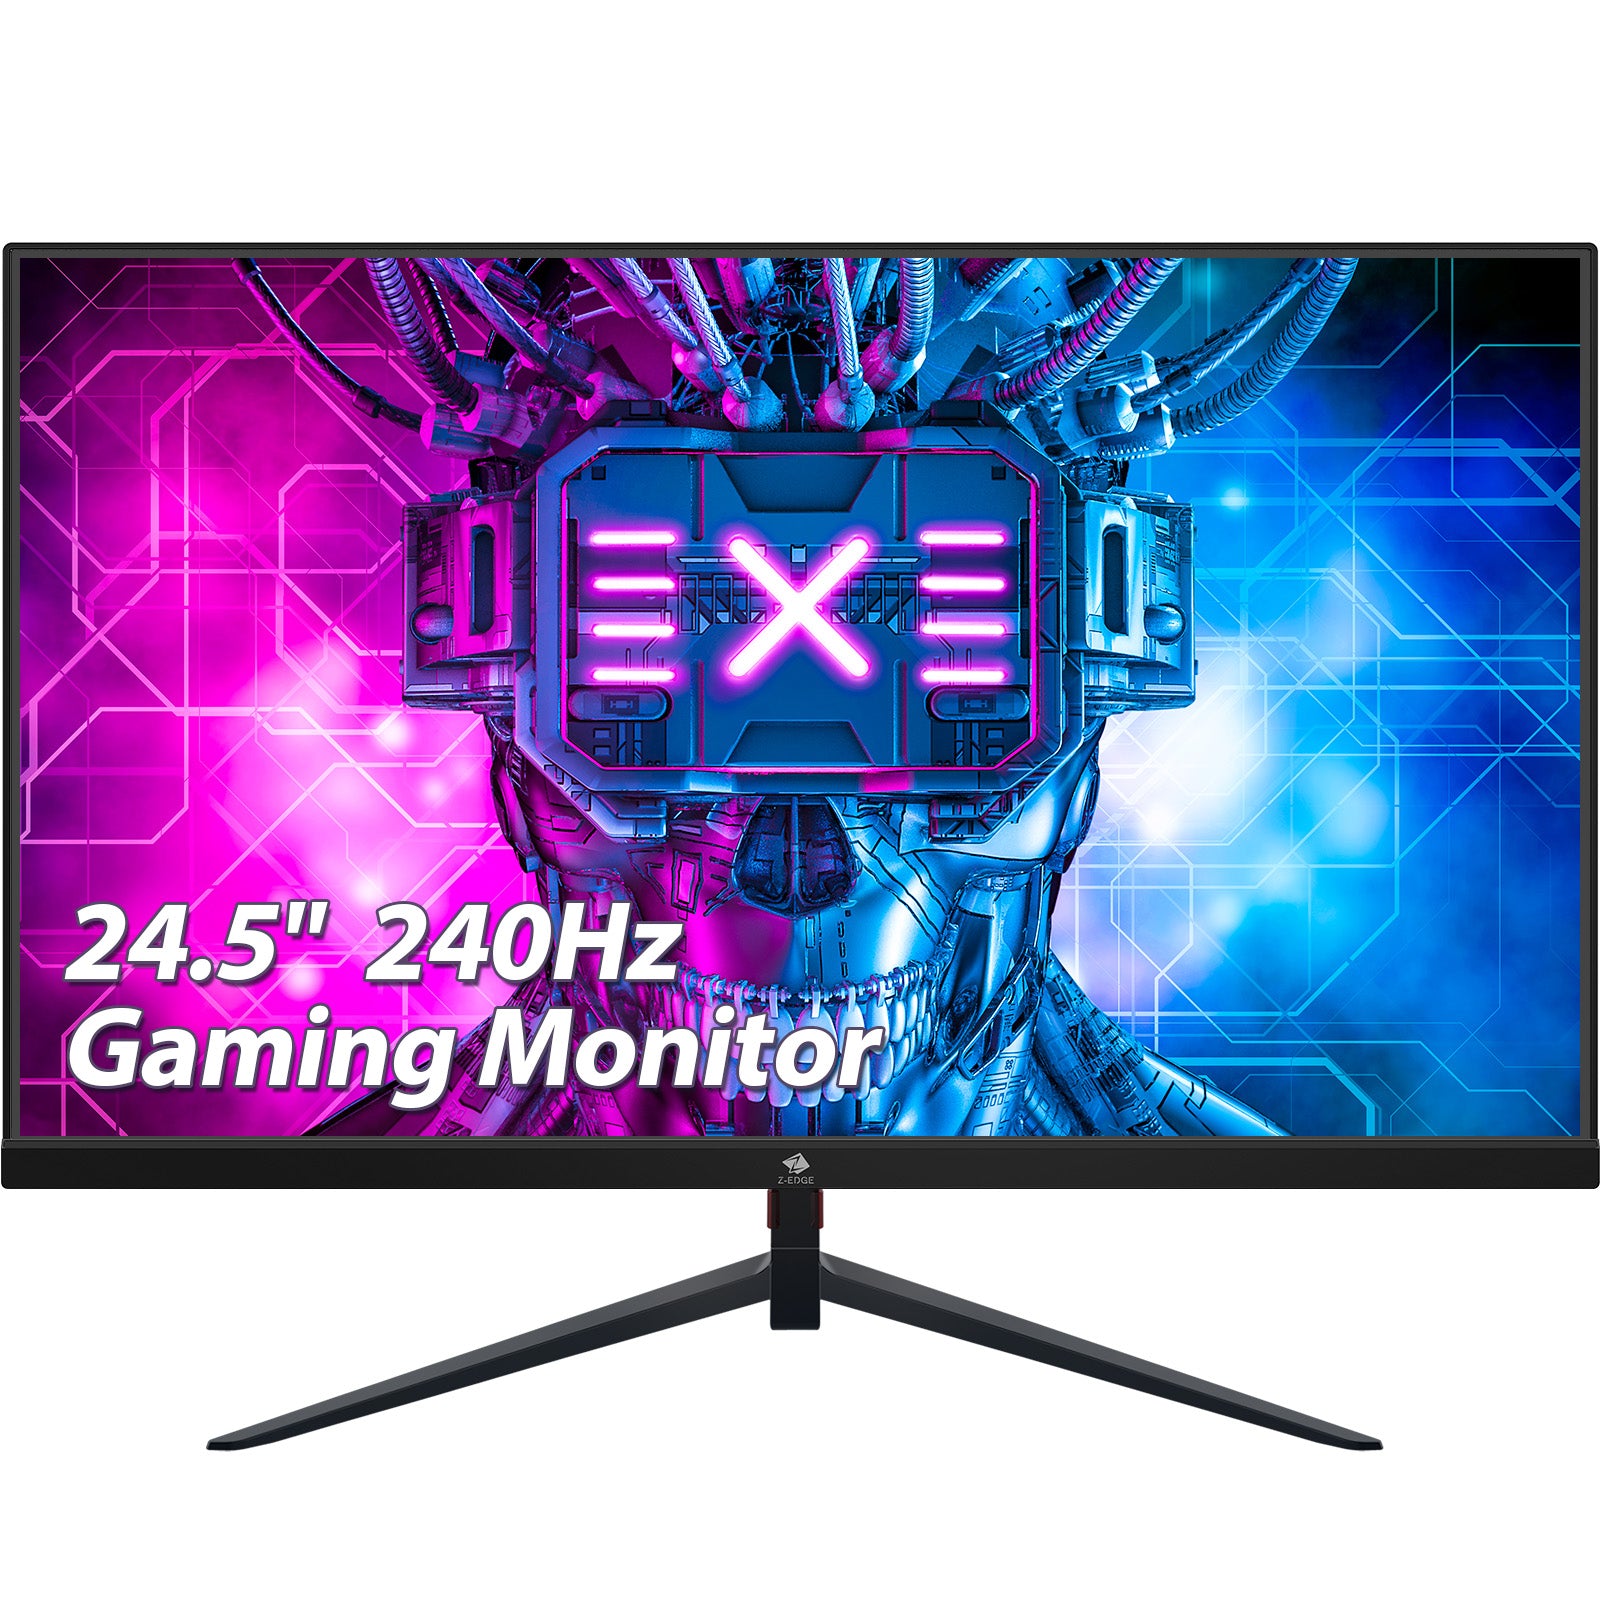 Z-Edge Moniteur Gaming incurvé 27 Pouces, 240 Hz, 1 ms MPRT Full